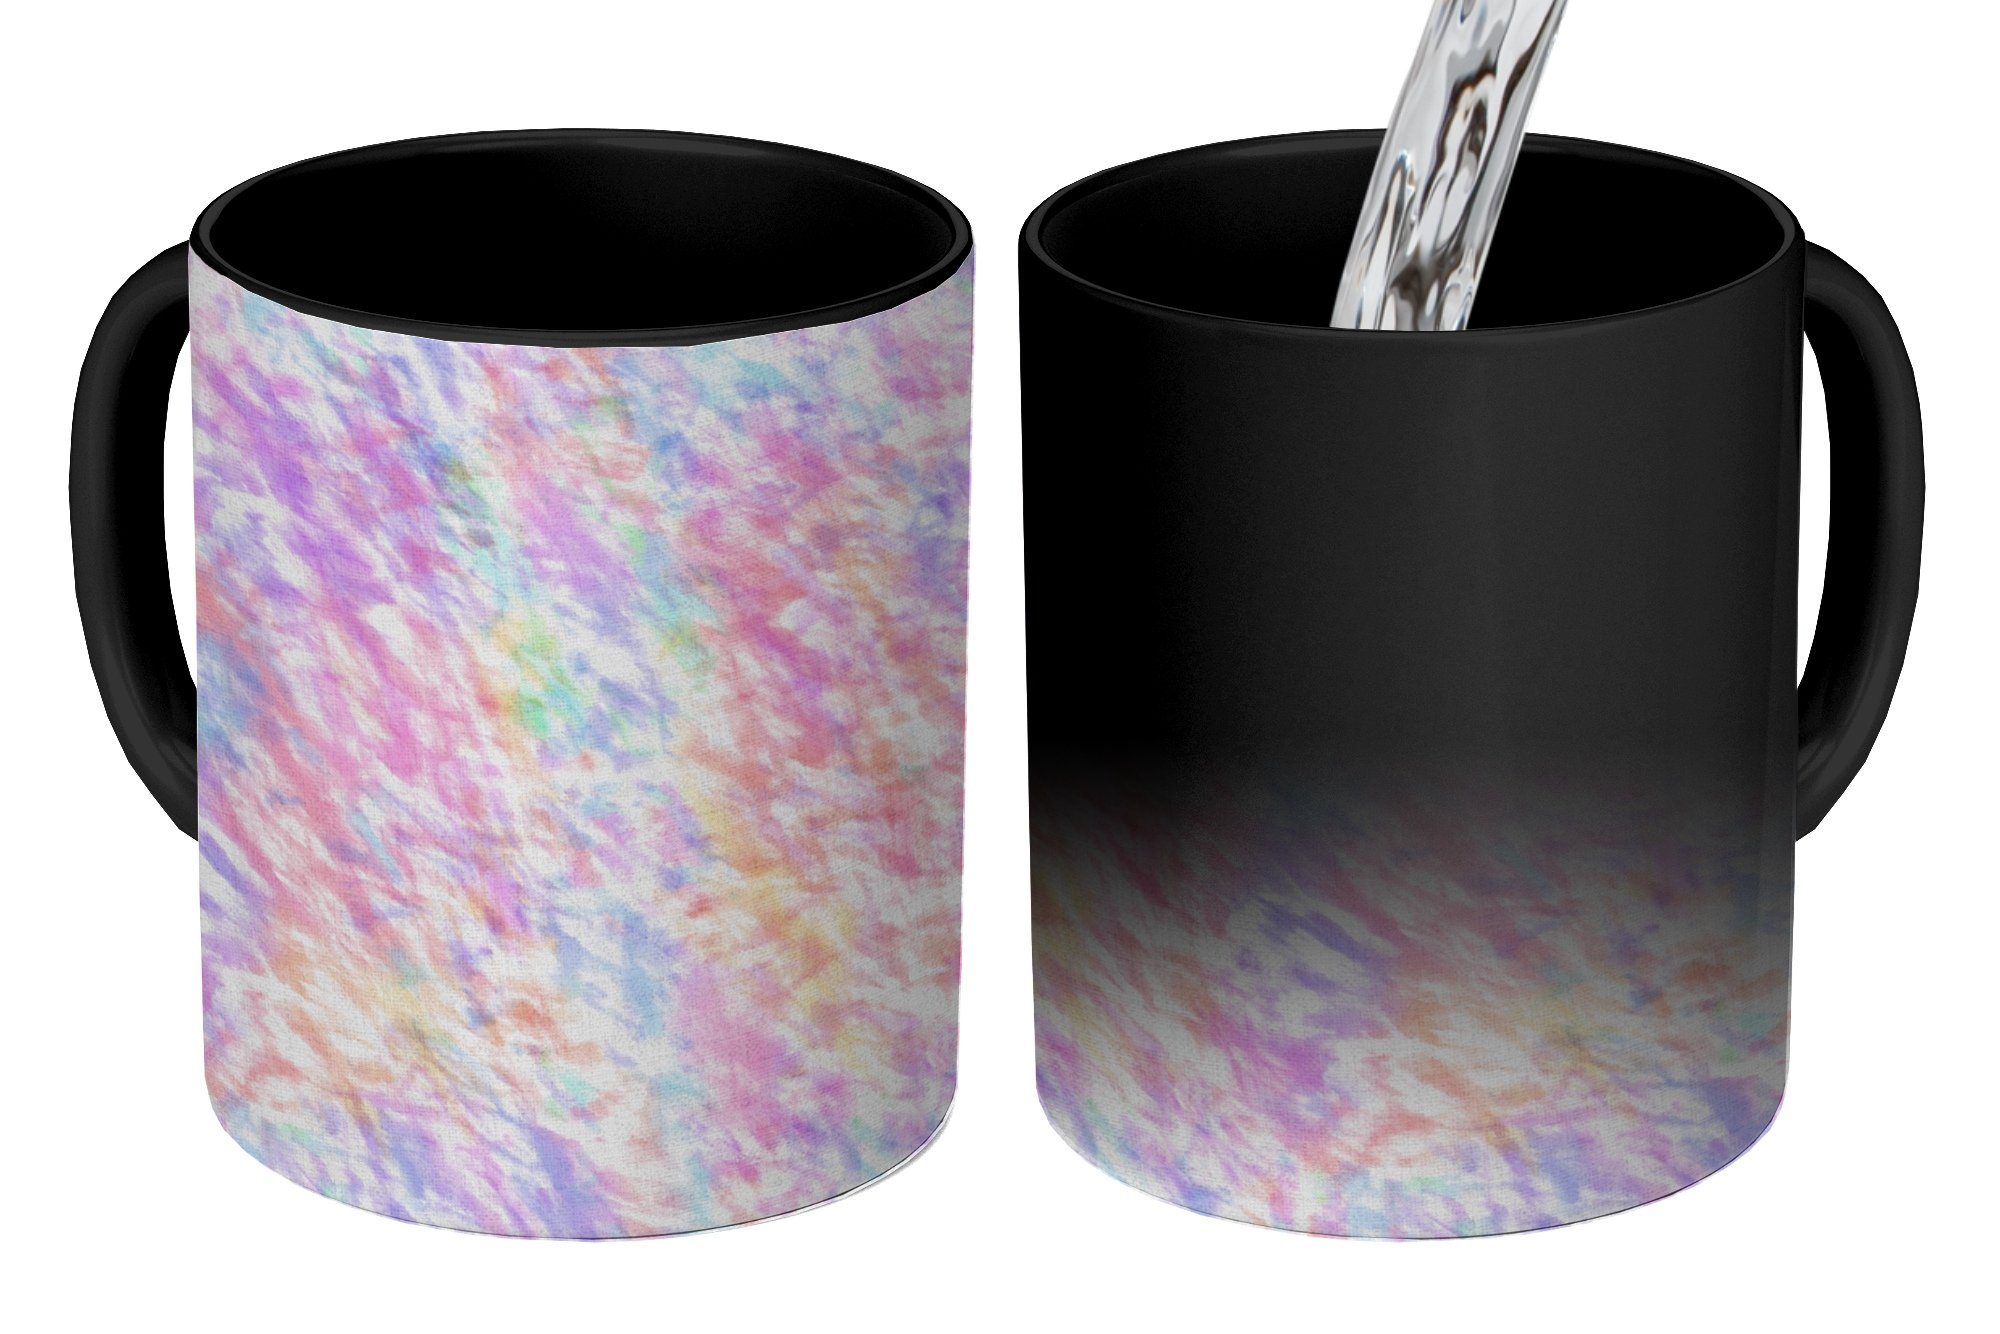 MuchoWow Tasse Regenbogen - Farbe - Muster - Krawattenfärbung, Keramik, Farbwechsel, Kaffeetassen, Teetasse, Zaubertasse, Geschenk